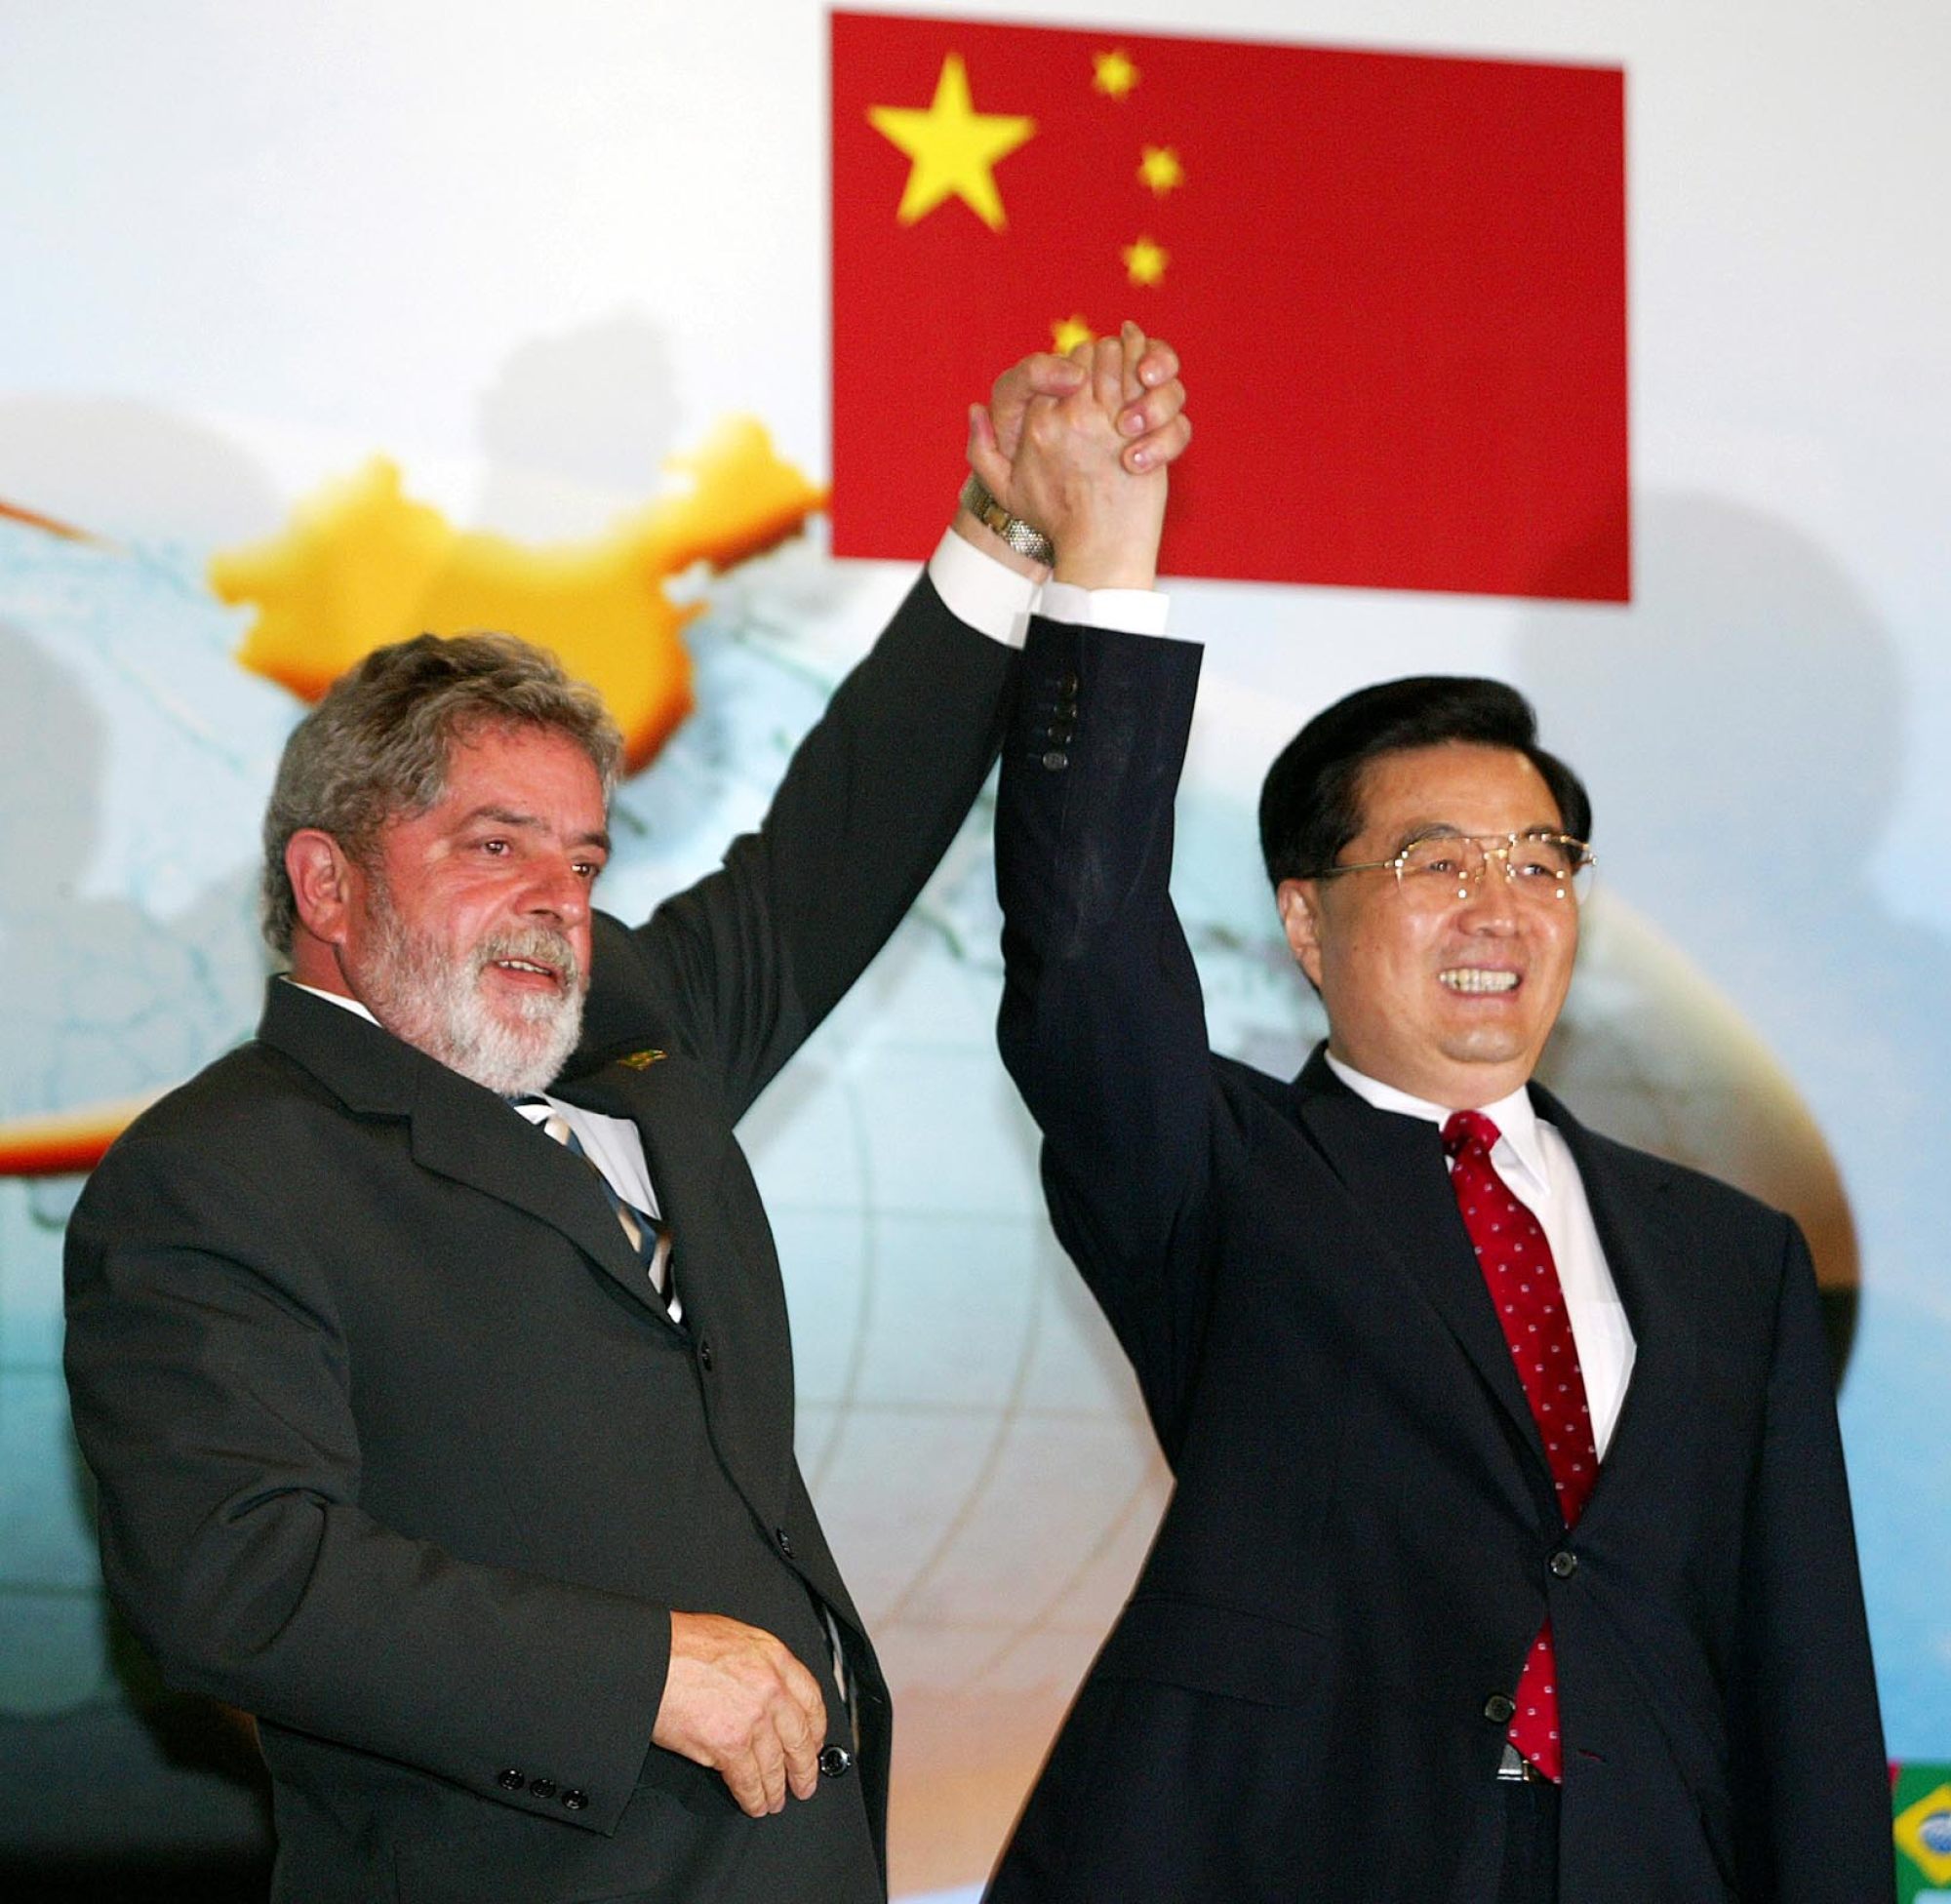 During his previous term in office, Brazil’s president-elect Luiz Inacio Lula da Silva built strong trade ties with China. Photo: AP